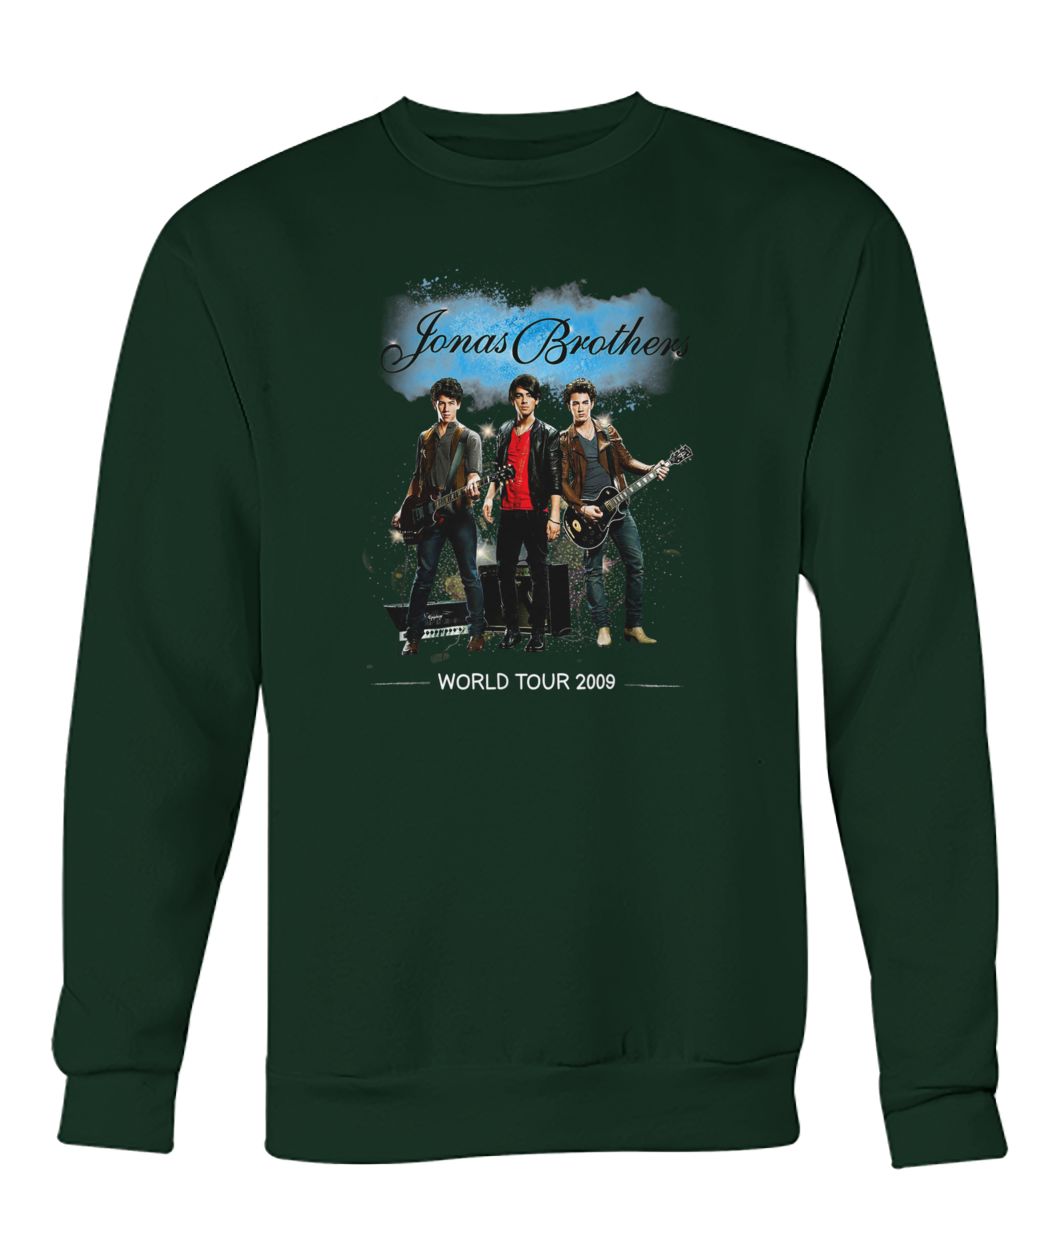 Jonas brothers world tour 2009 crew neck sweatshirt